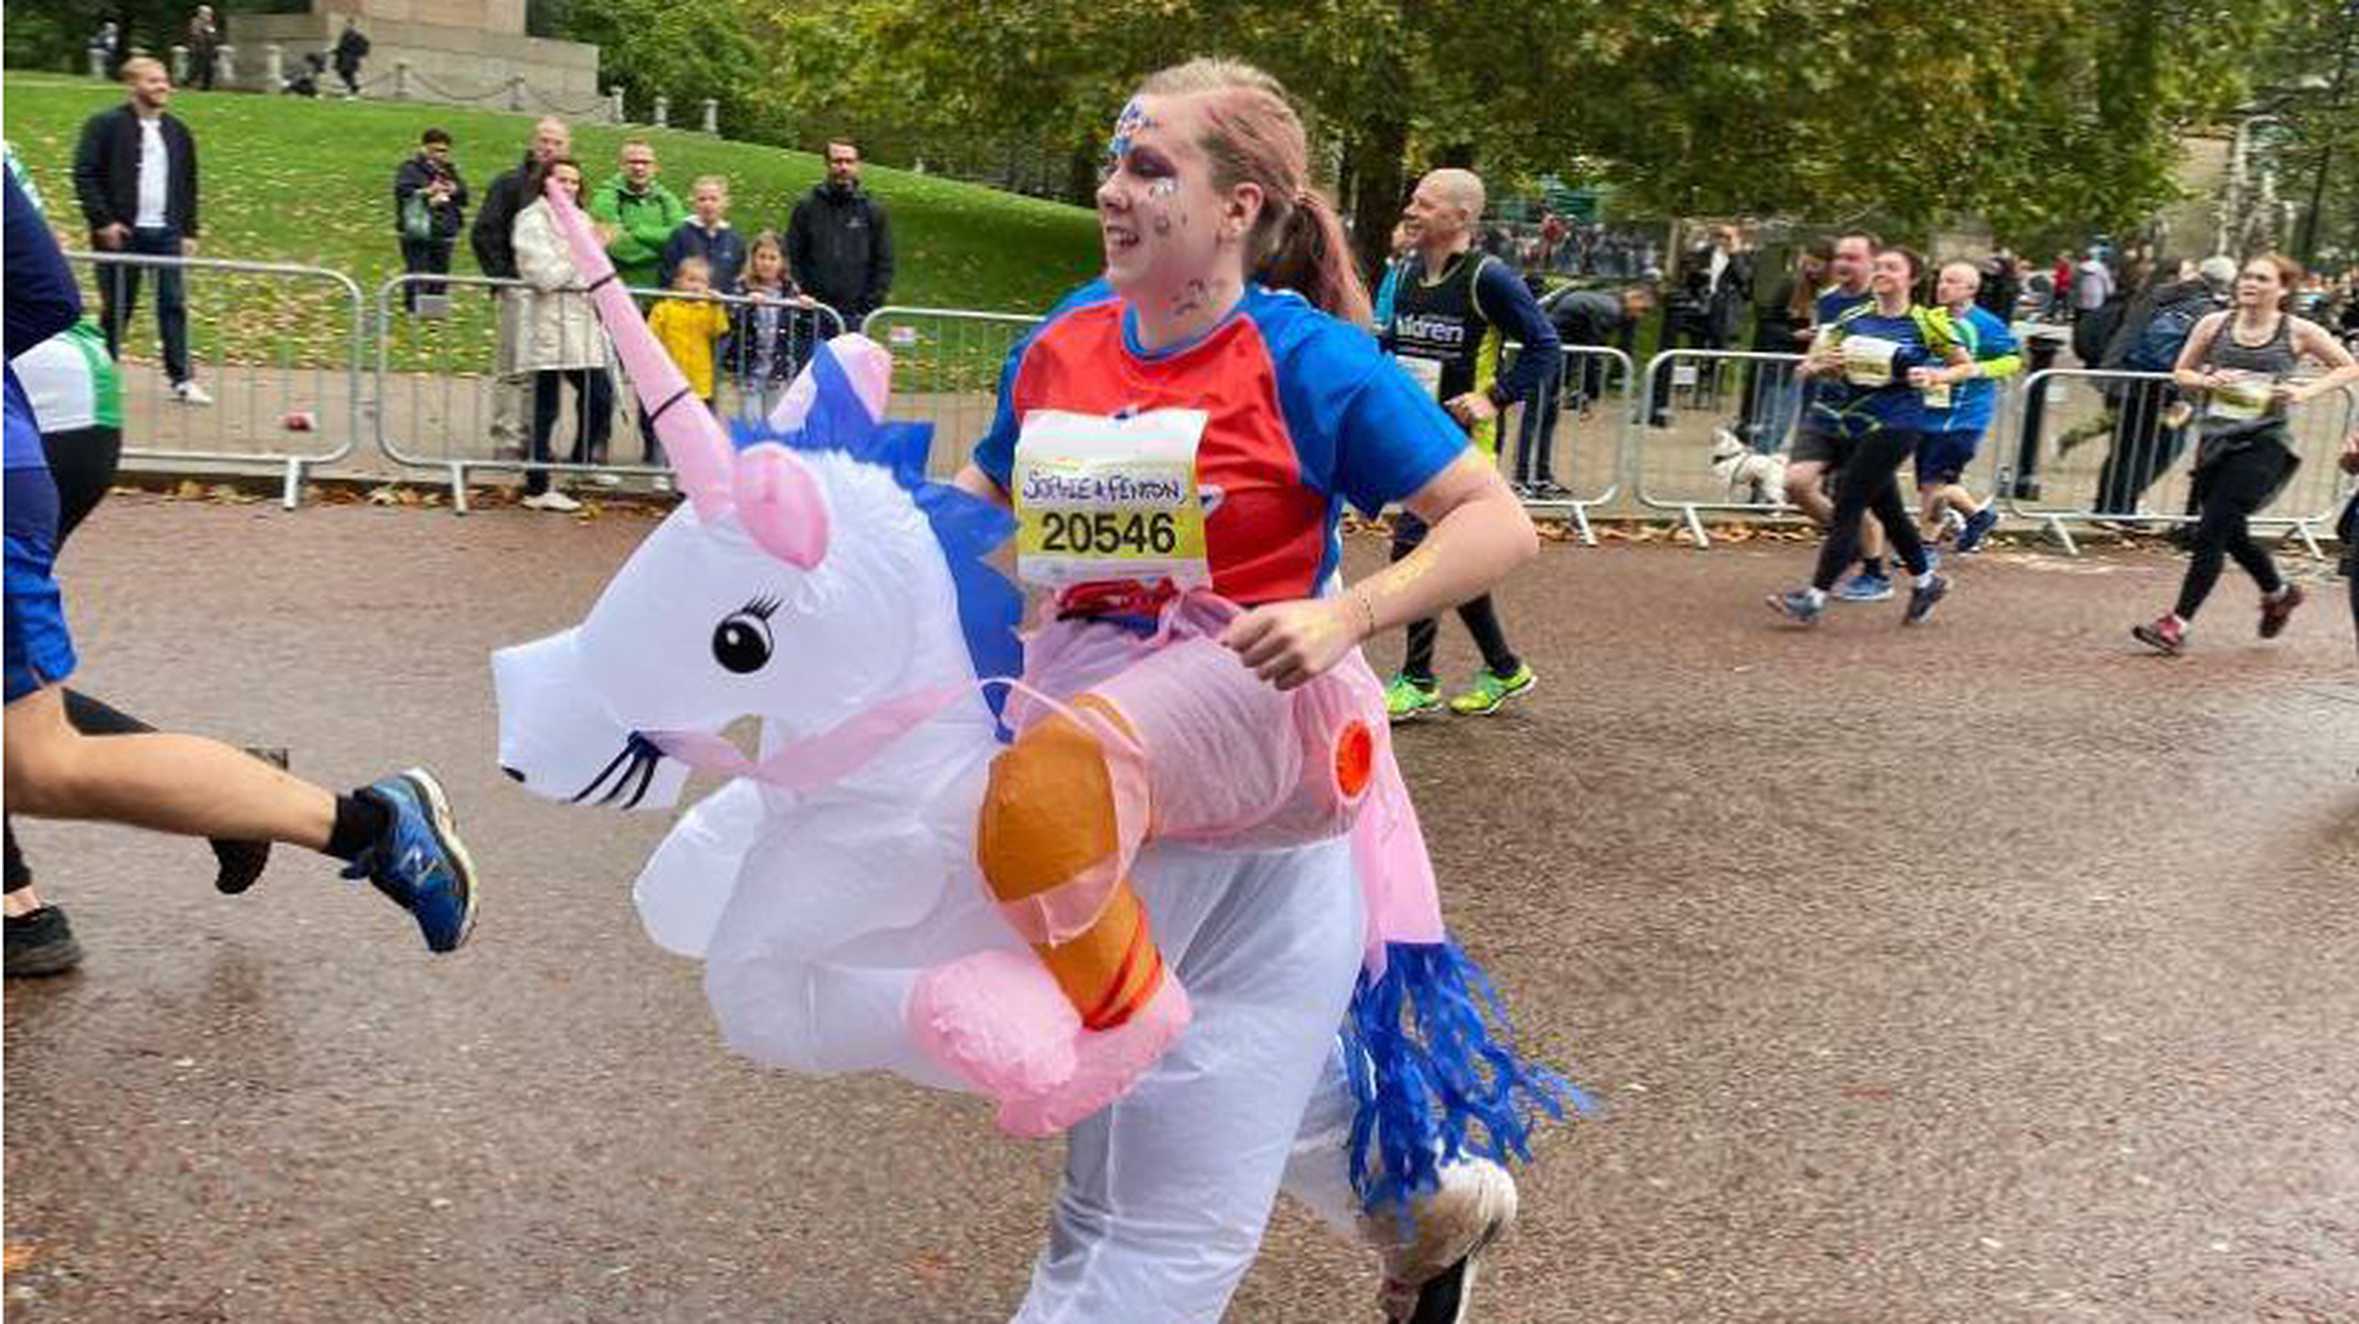 A #WishHero running in a unicorn fancy dress costume during the Royal Parks half marathon.